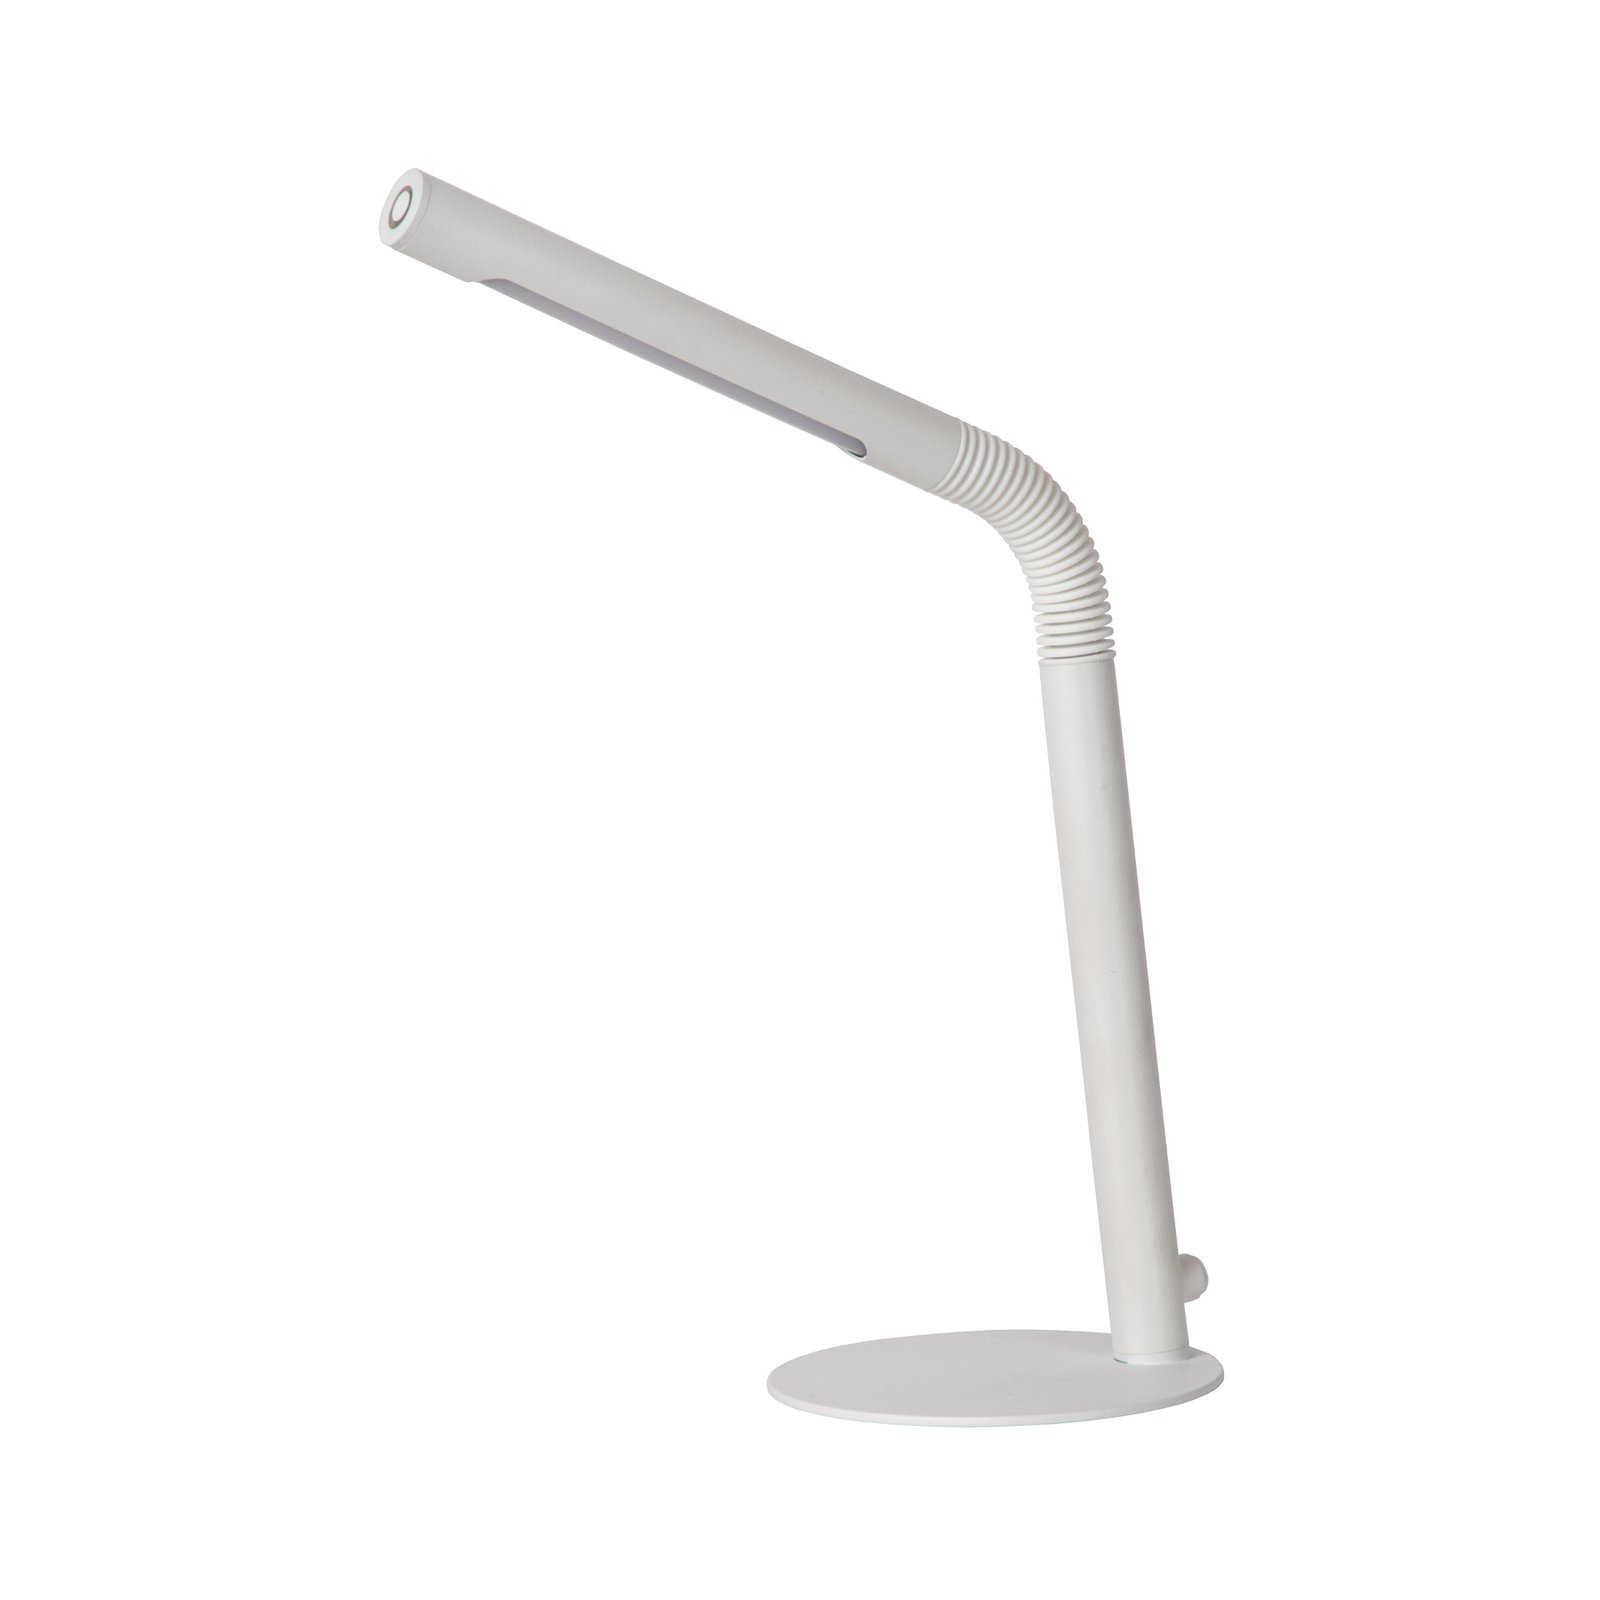 Gilly uzlādējama LED galda lampa, balta